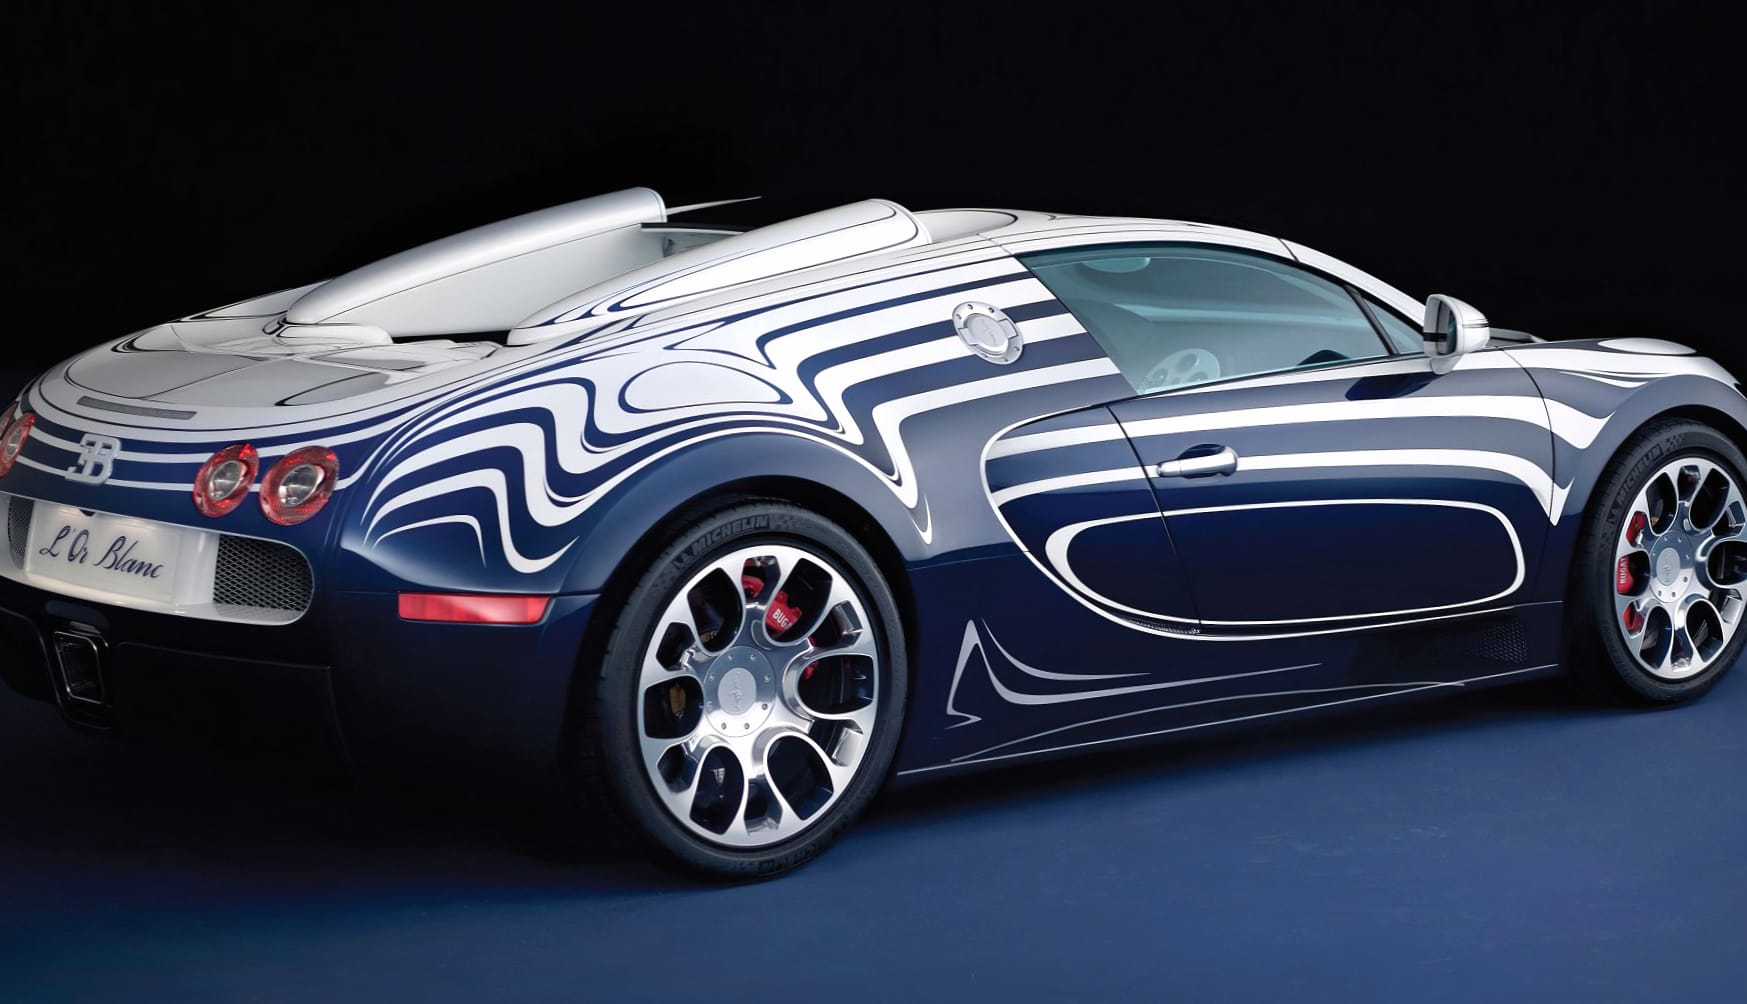 Bugatti Veyron Grand Sport LOr Blanc at 2048 x 2048 iPad size wallpapers HD quality